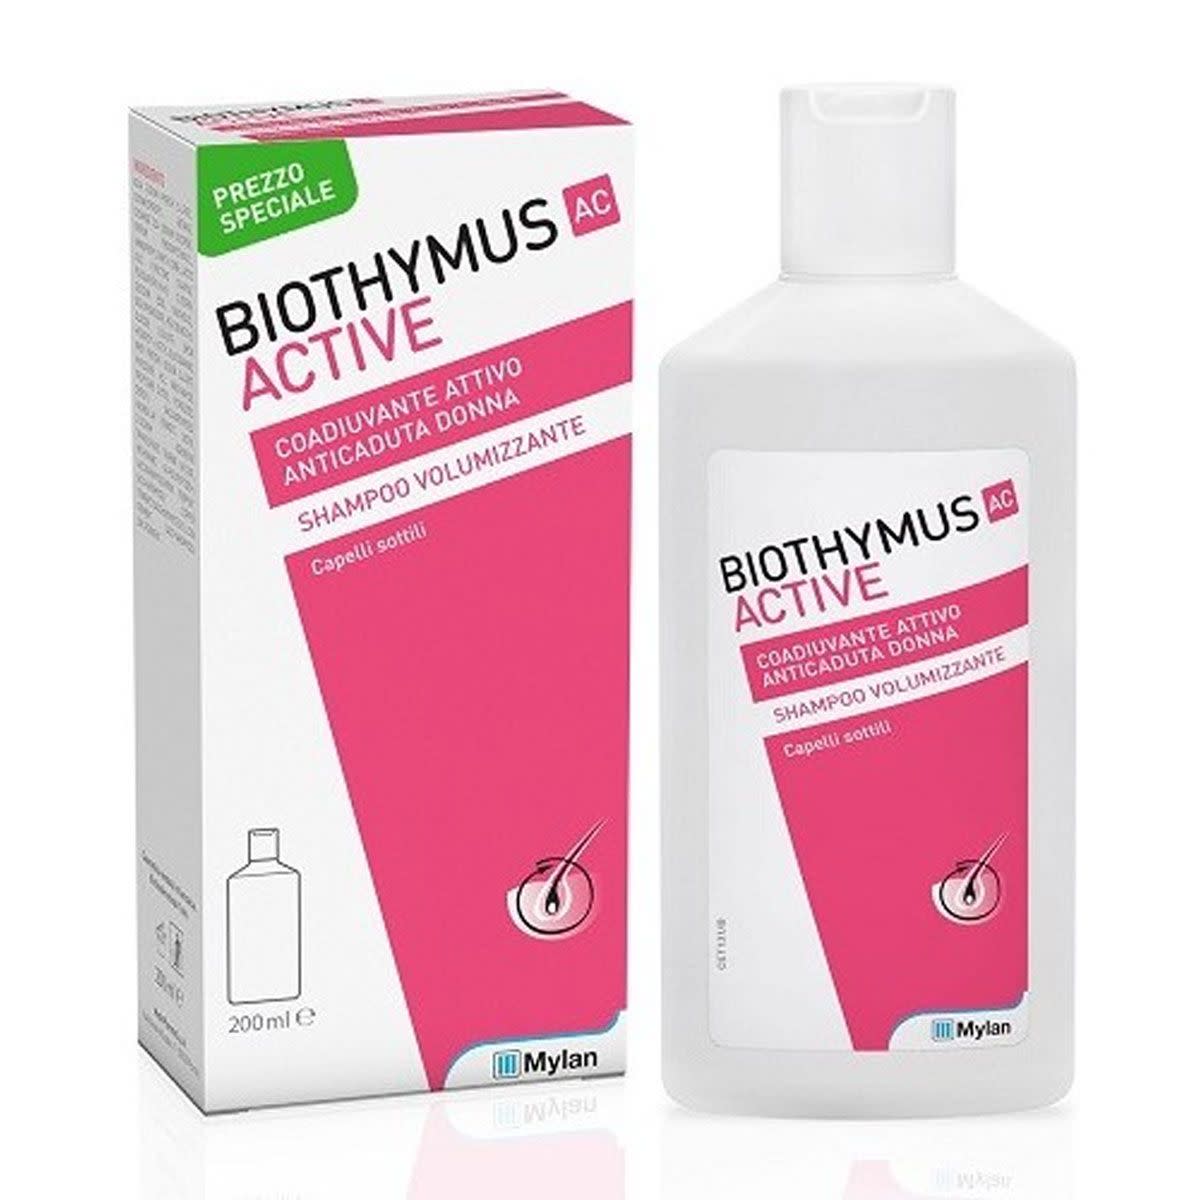 934408663 - Biothymus Biothymus Ac Active Shampoo Donna Volumizzante Anticaduta Capelli 200ml - 7878361_3.jpg